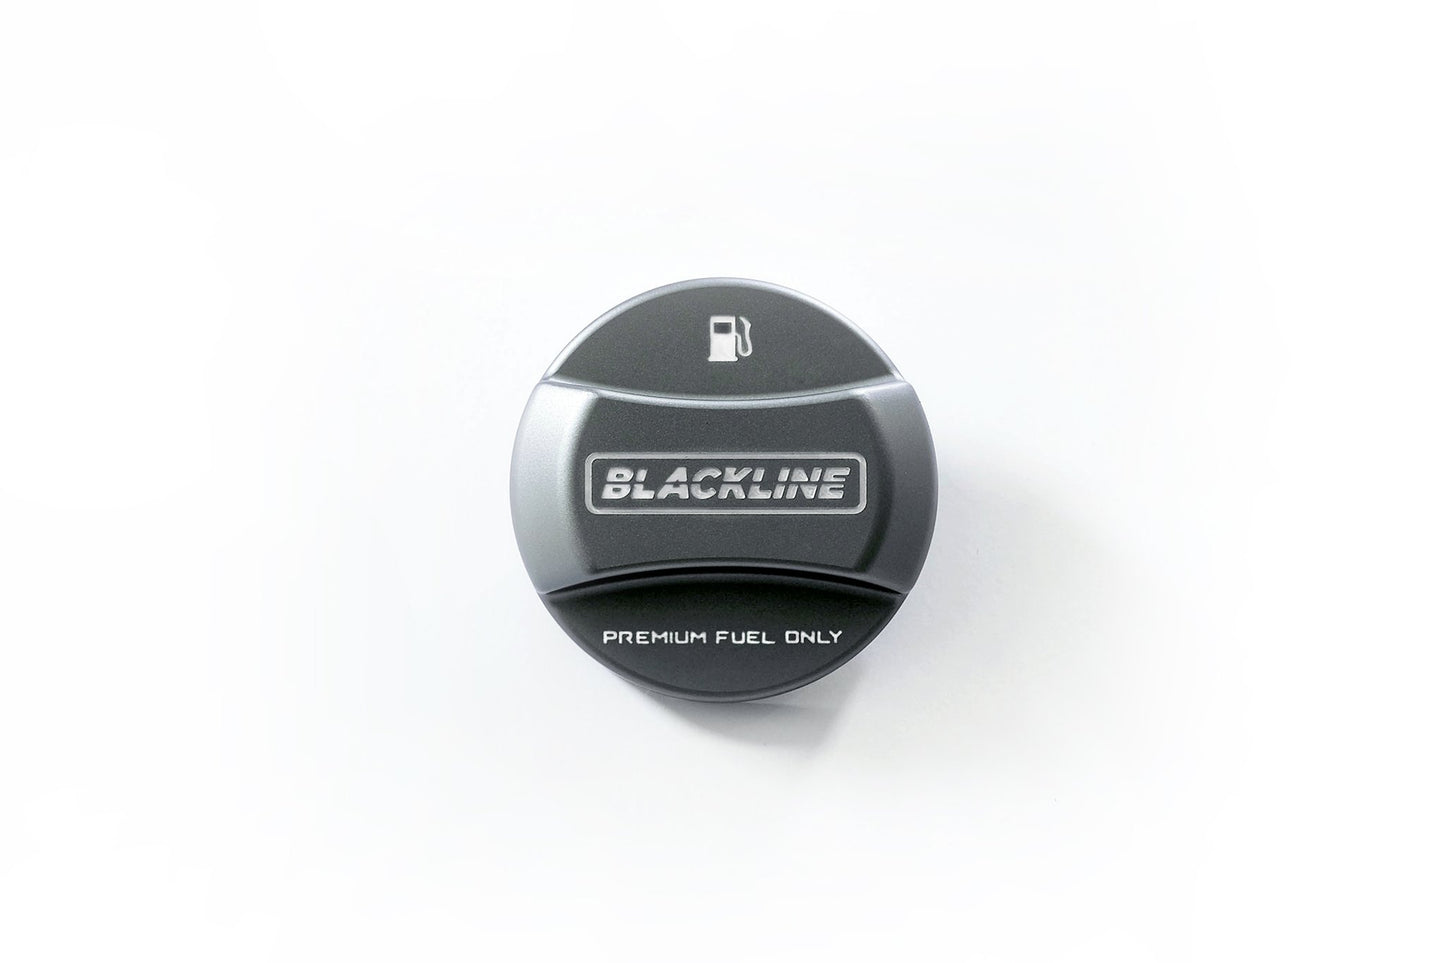 BMW M Car Series Blackline Performance Edition Fuel Cap Cover